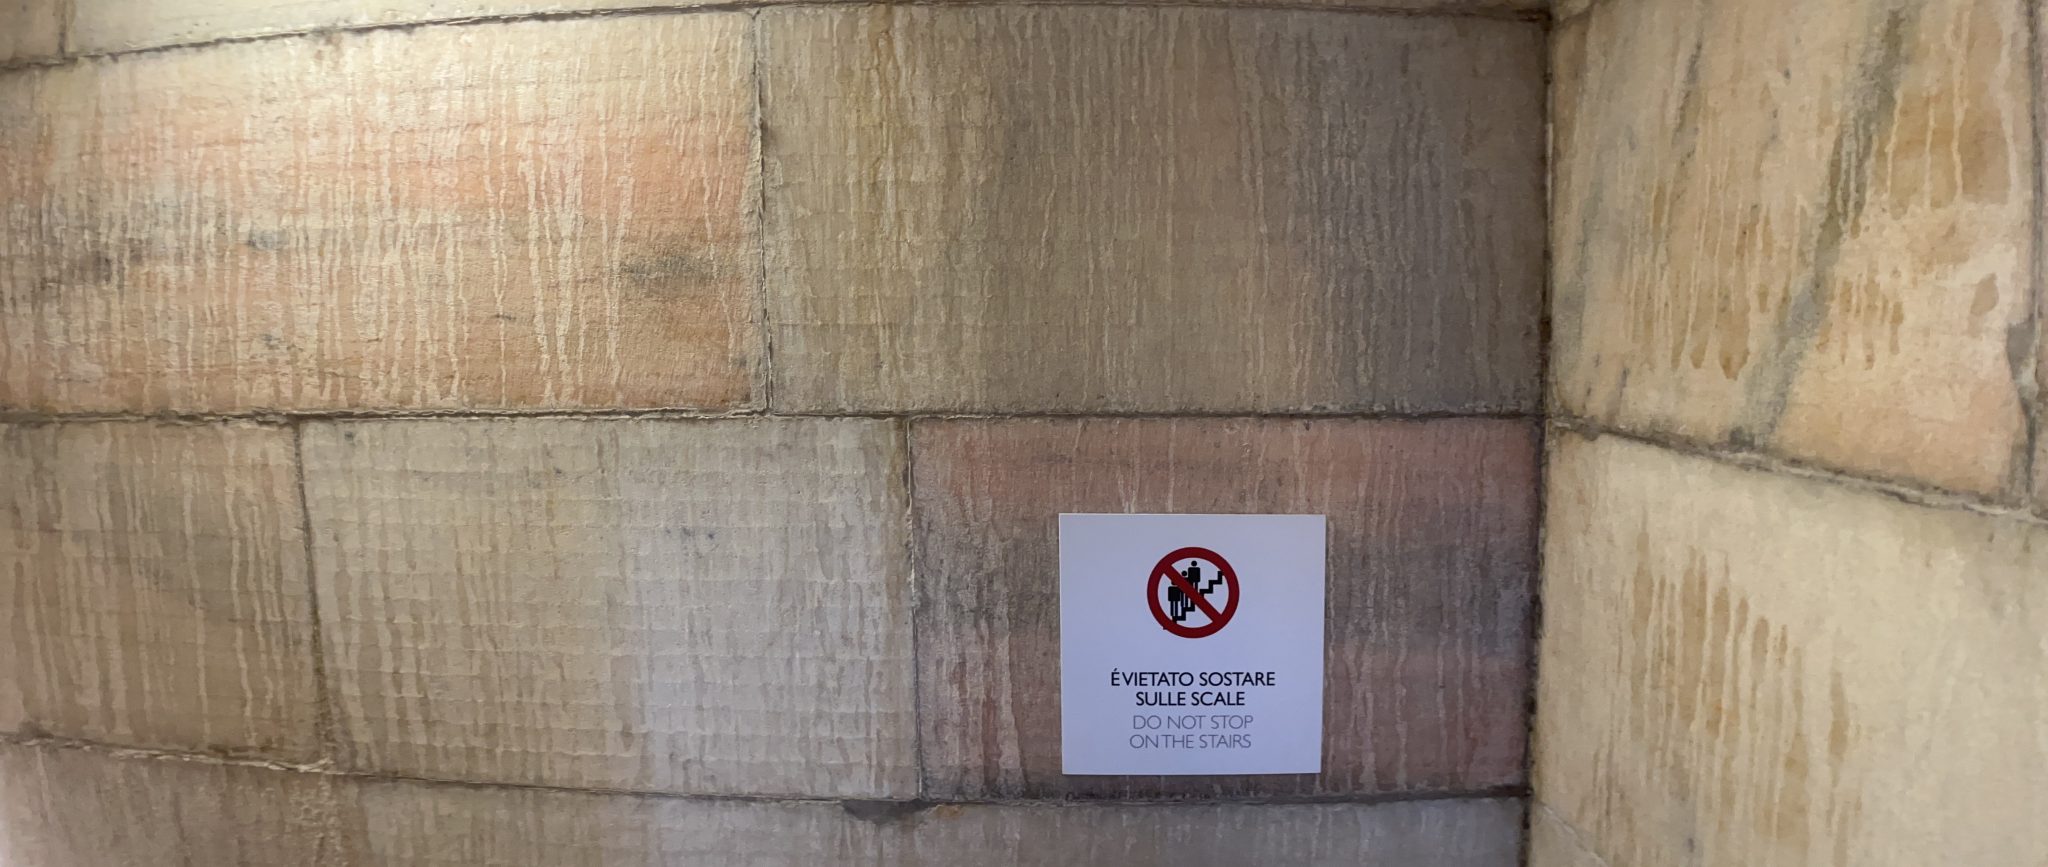 Warning sign, Duomo de Milano, Milan, italy, cathedral